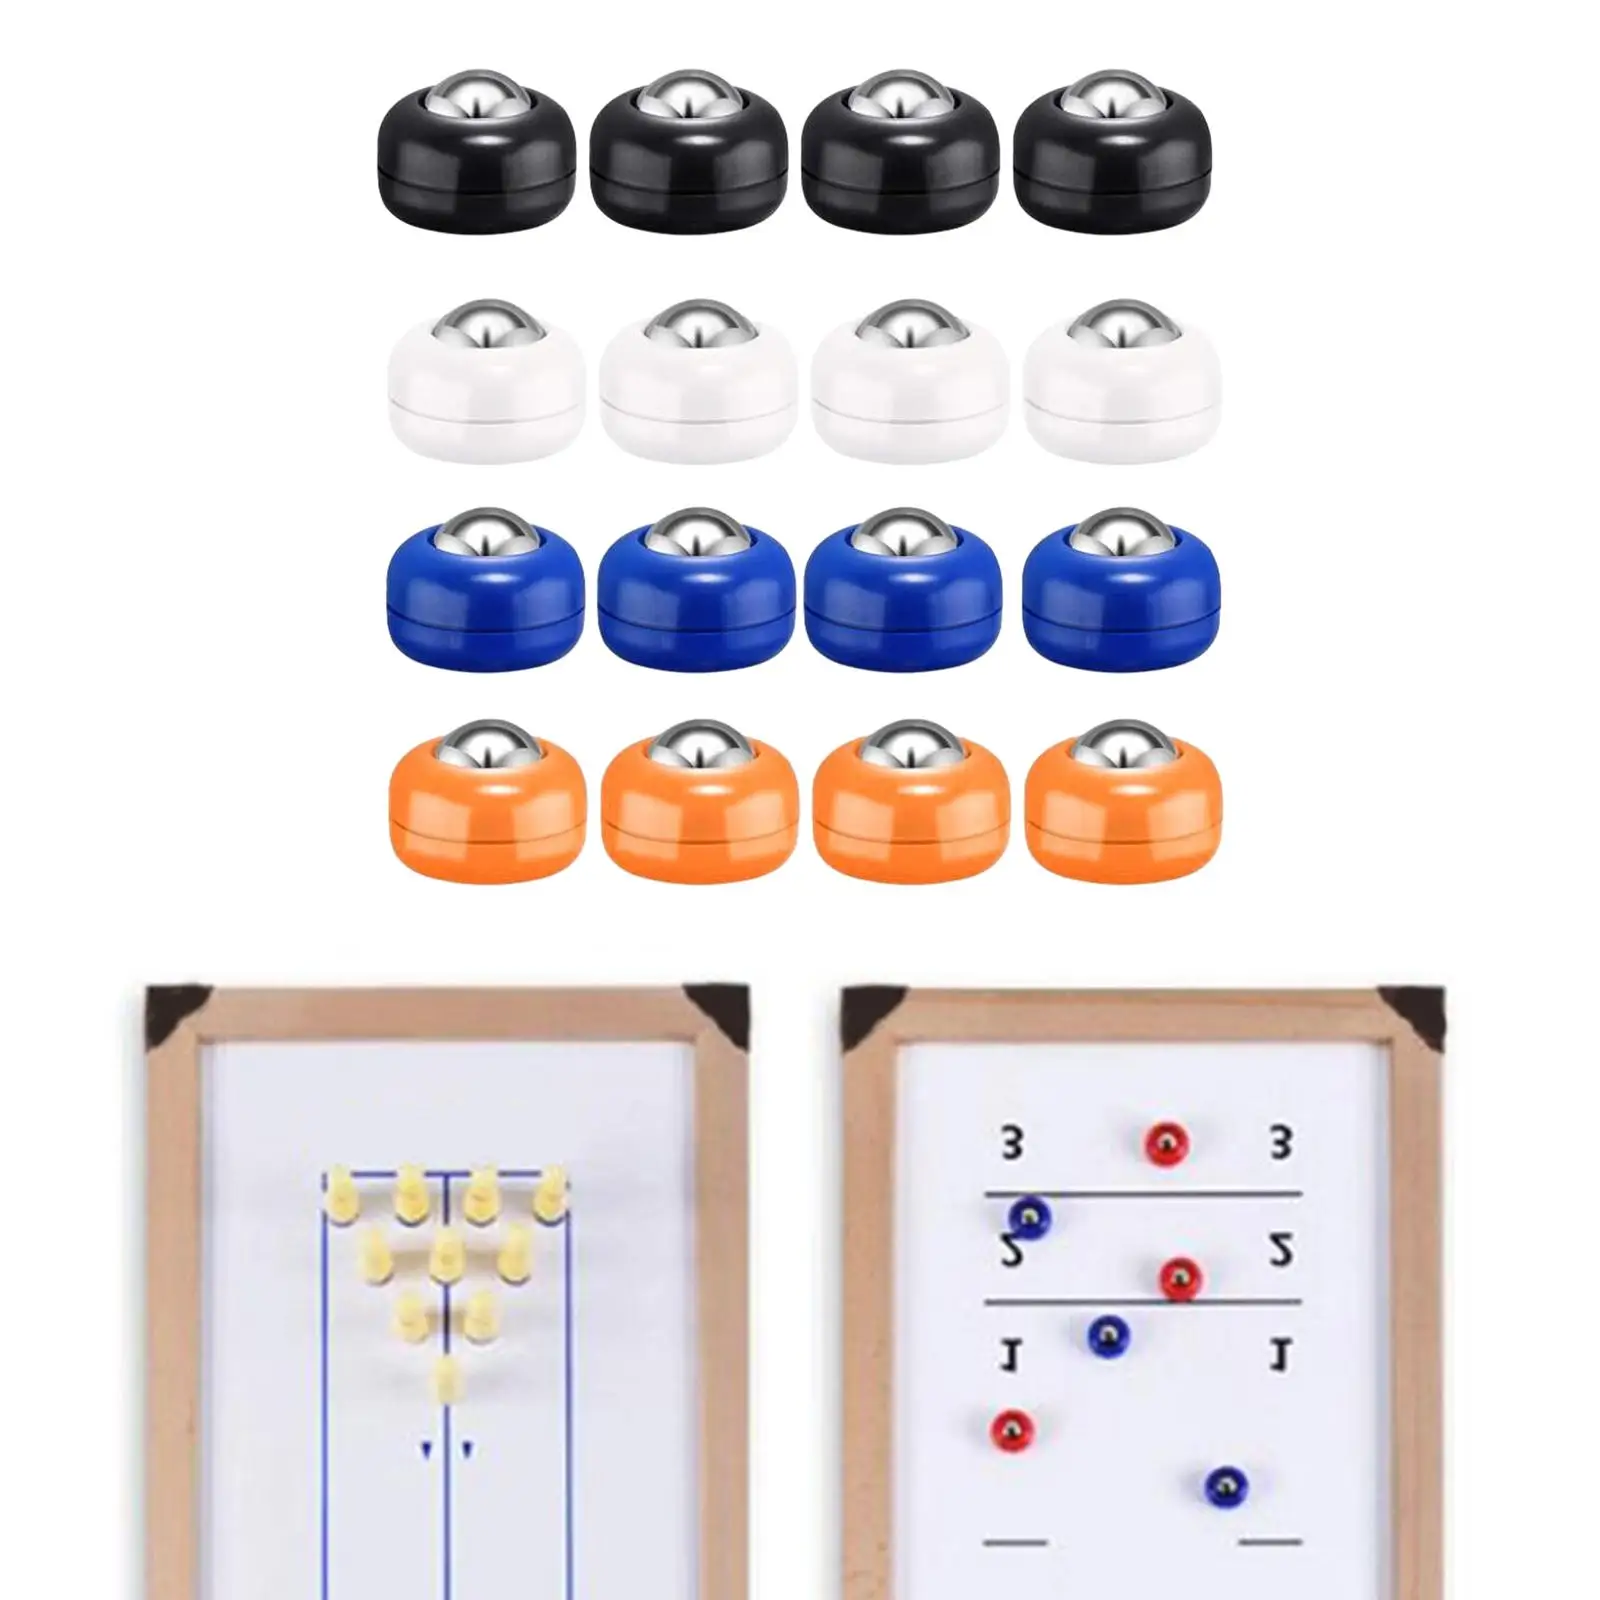 16x Shuffleboard Pucks Shuffleboard Accessories 4 Colors Indoor Shuffleboard Games Pucks for Kids Adults Leisure Sports Playing